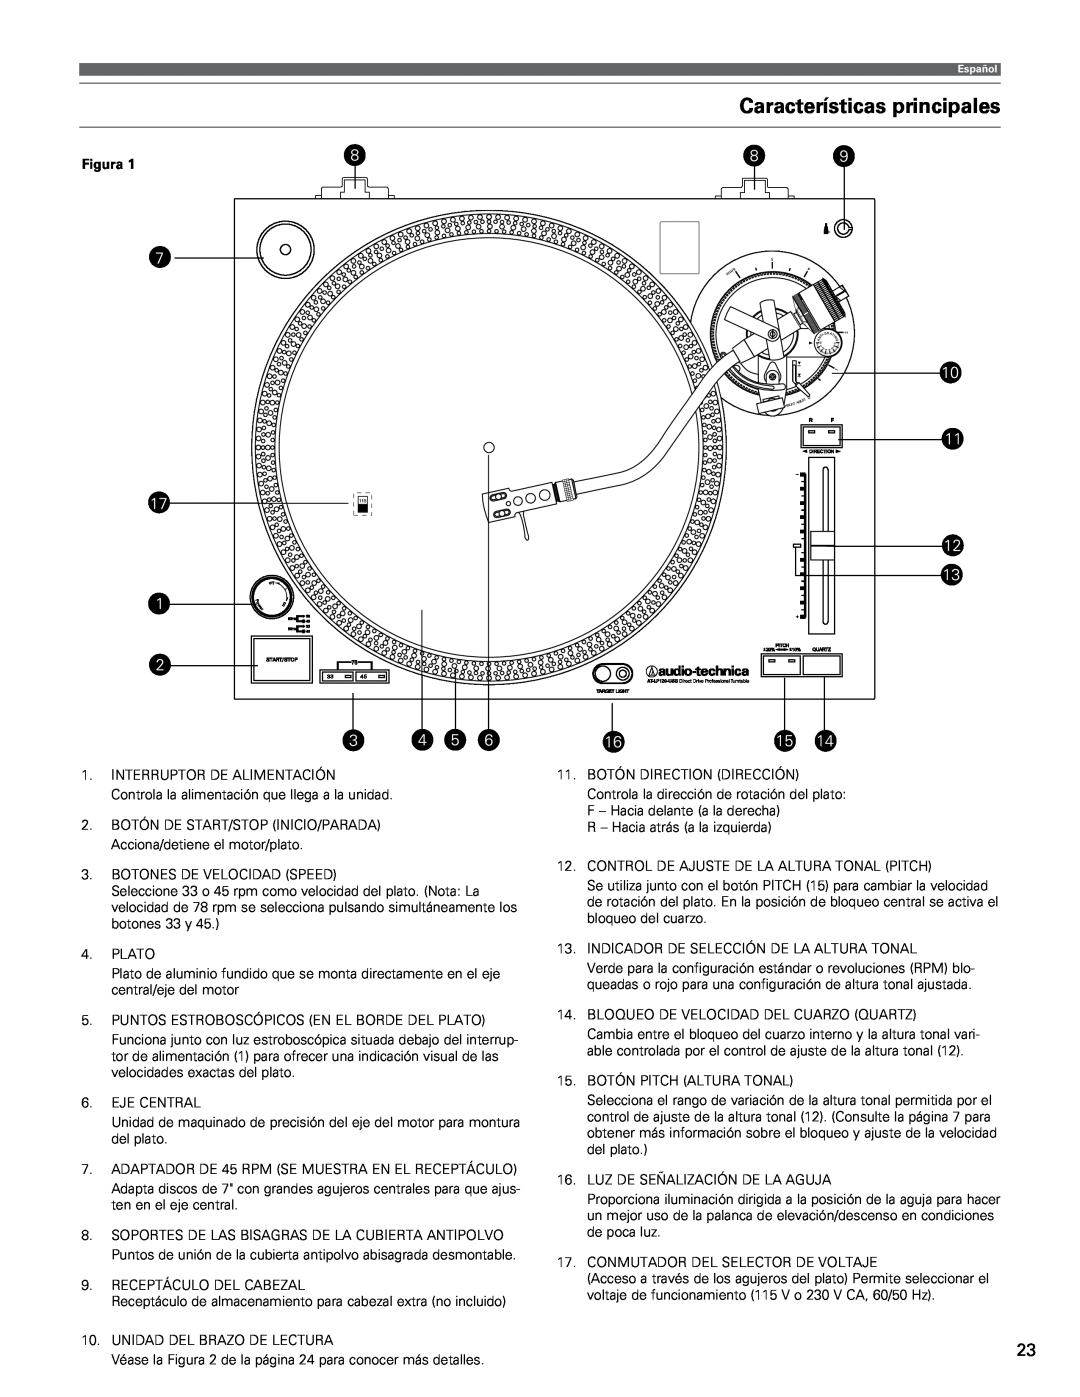 Audio-Technica AT-LP120-USB manual Características principales, Figura 